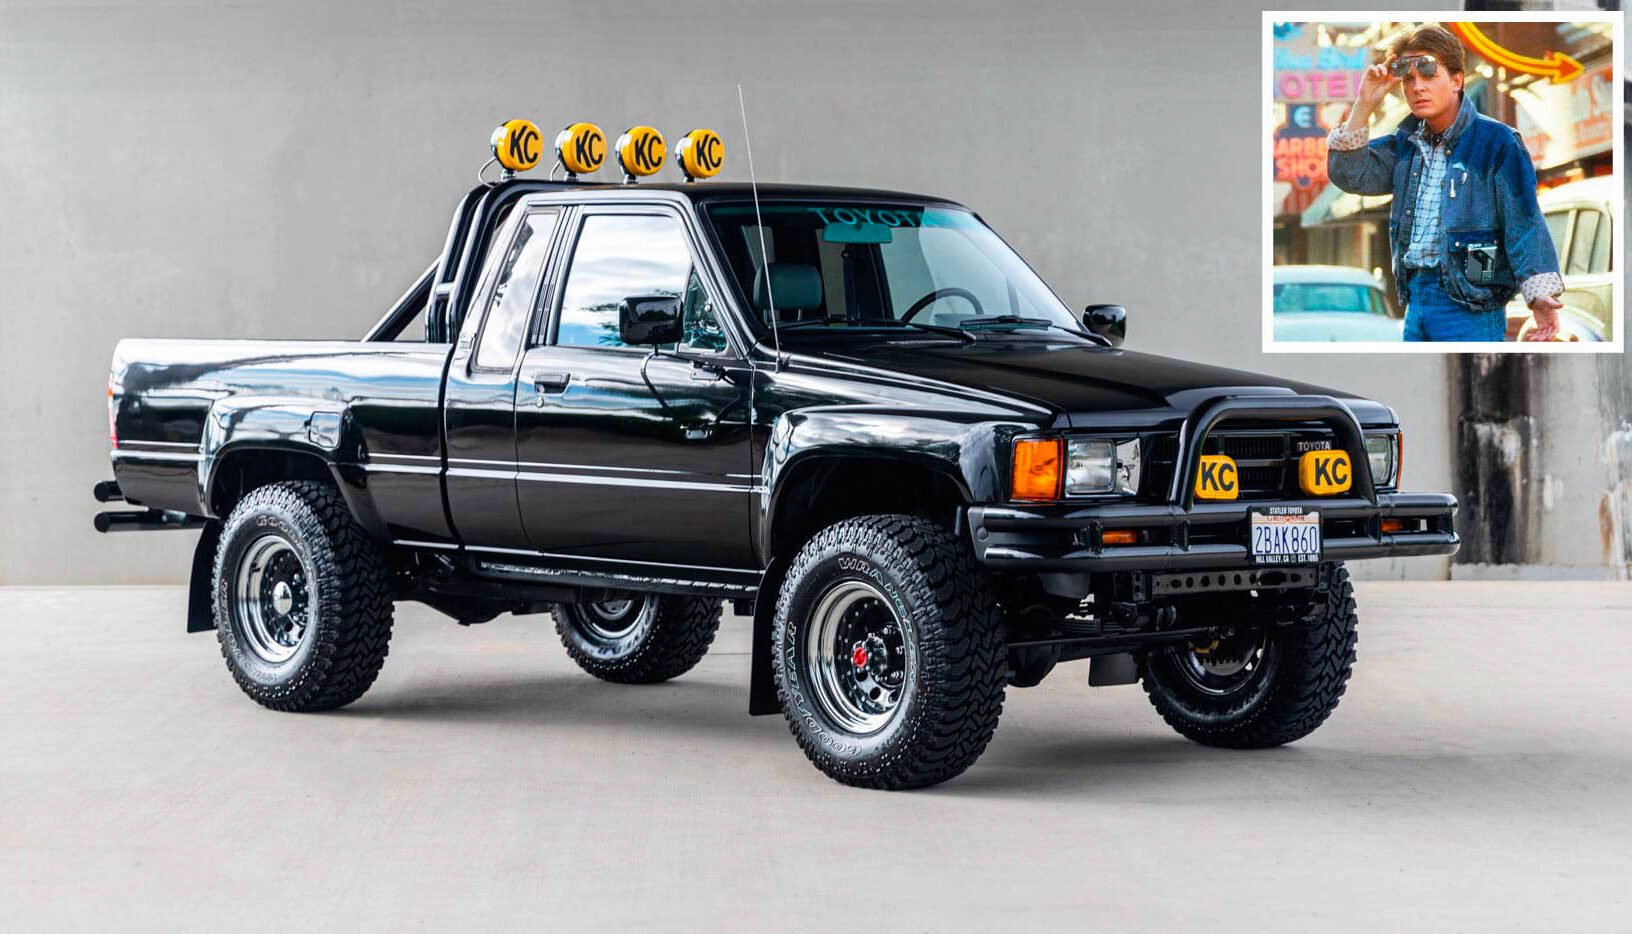 For Sale: A “Back To The Future” Spec Toyota SR5 Pickup Truck via @Silodrome